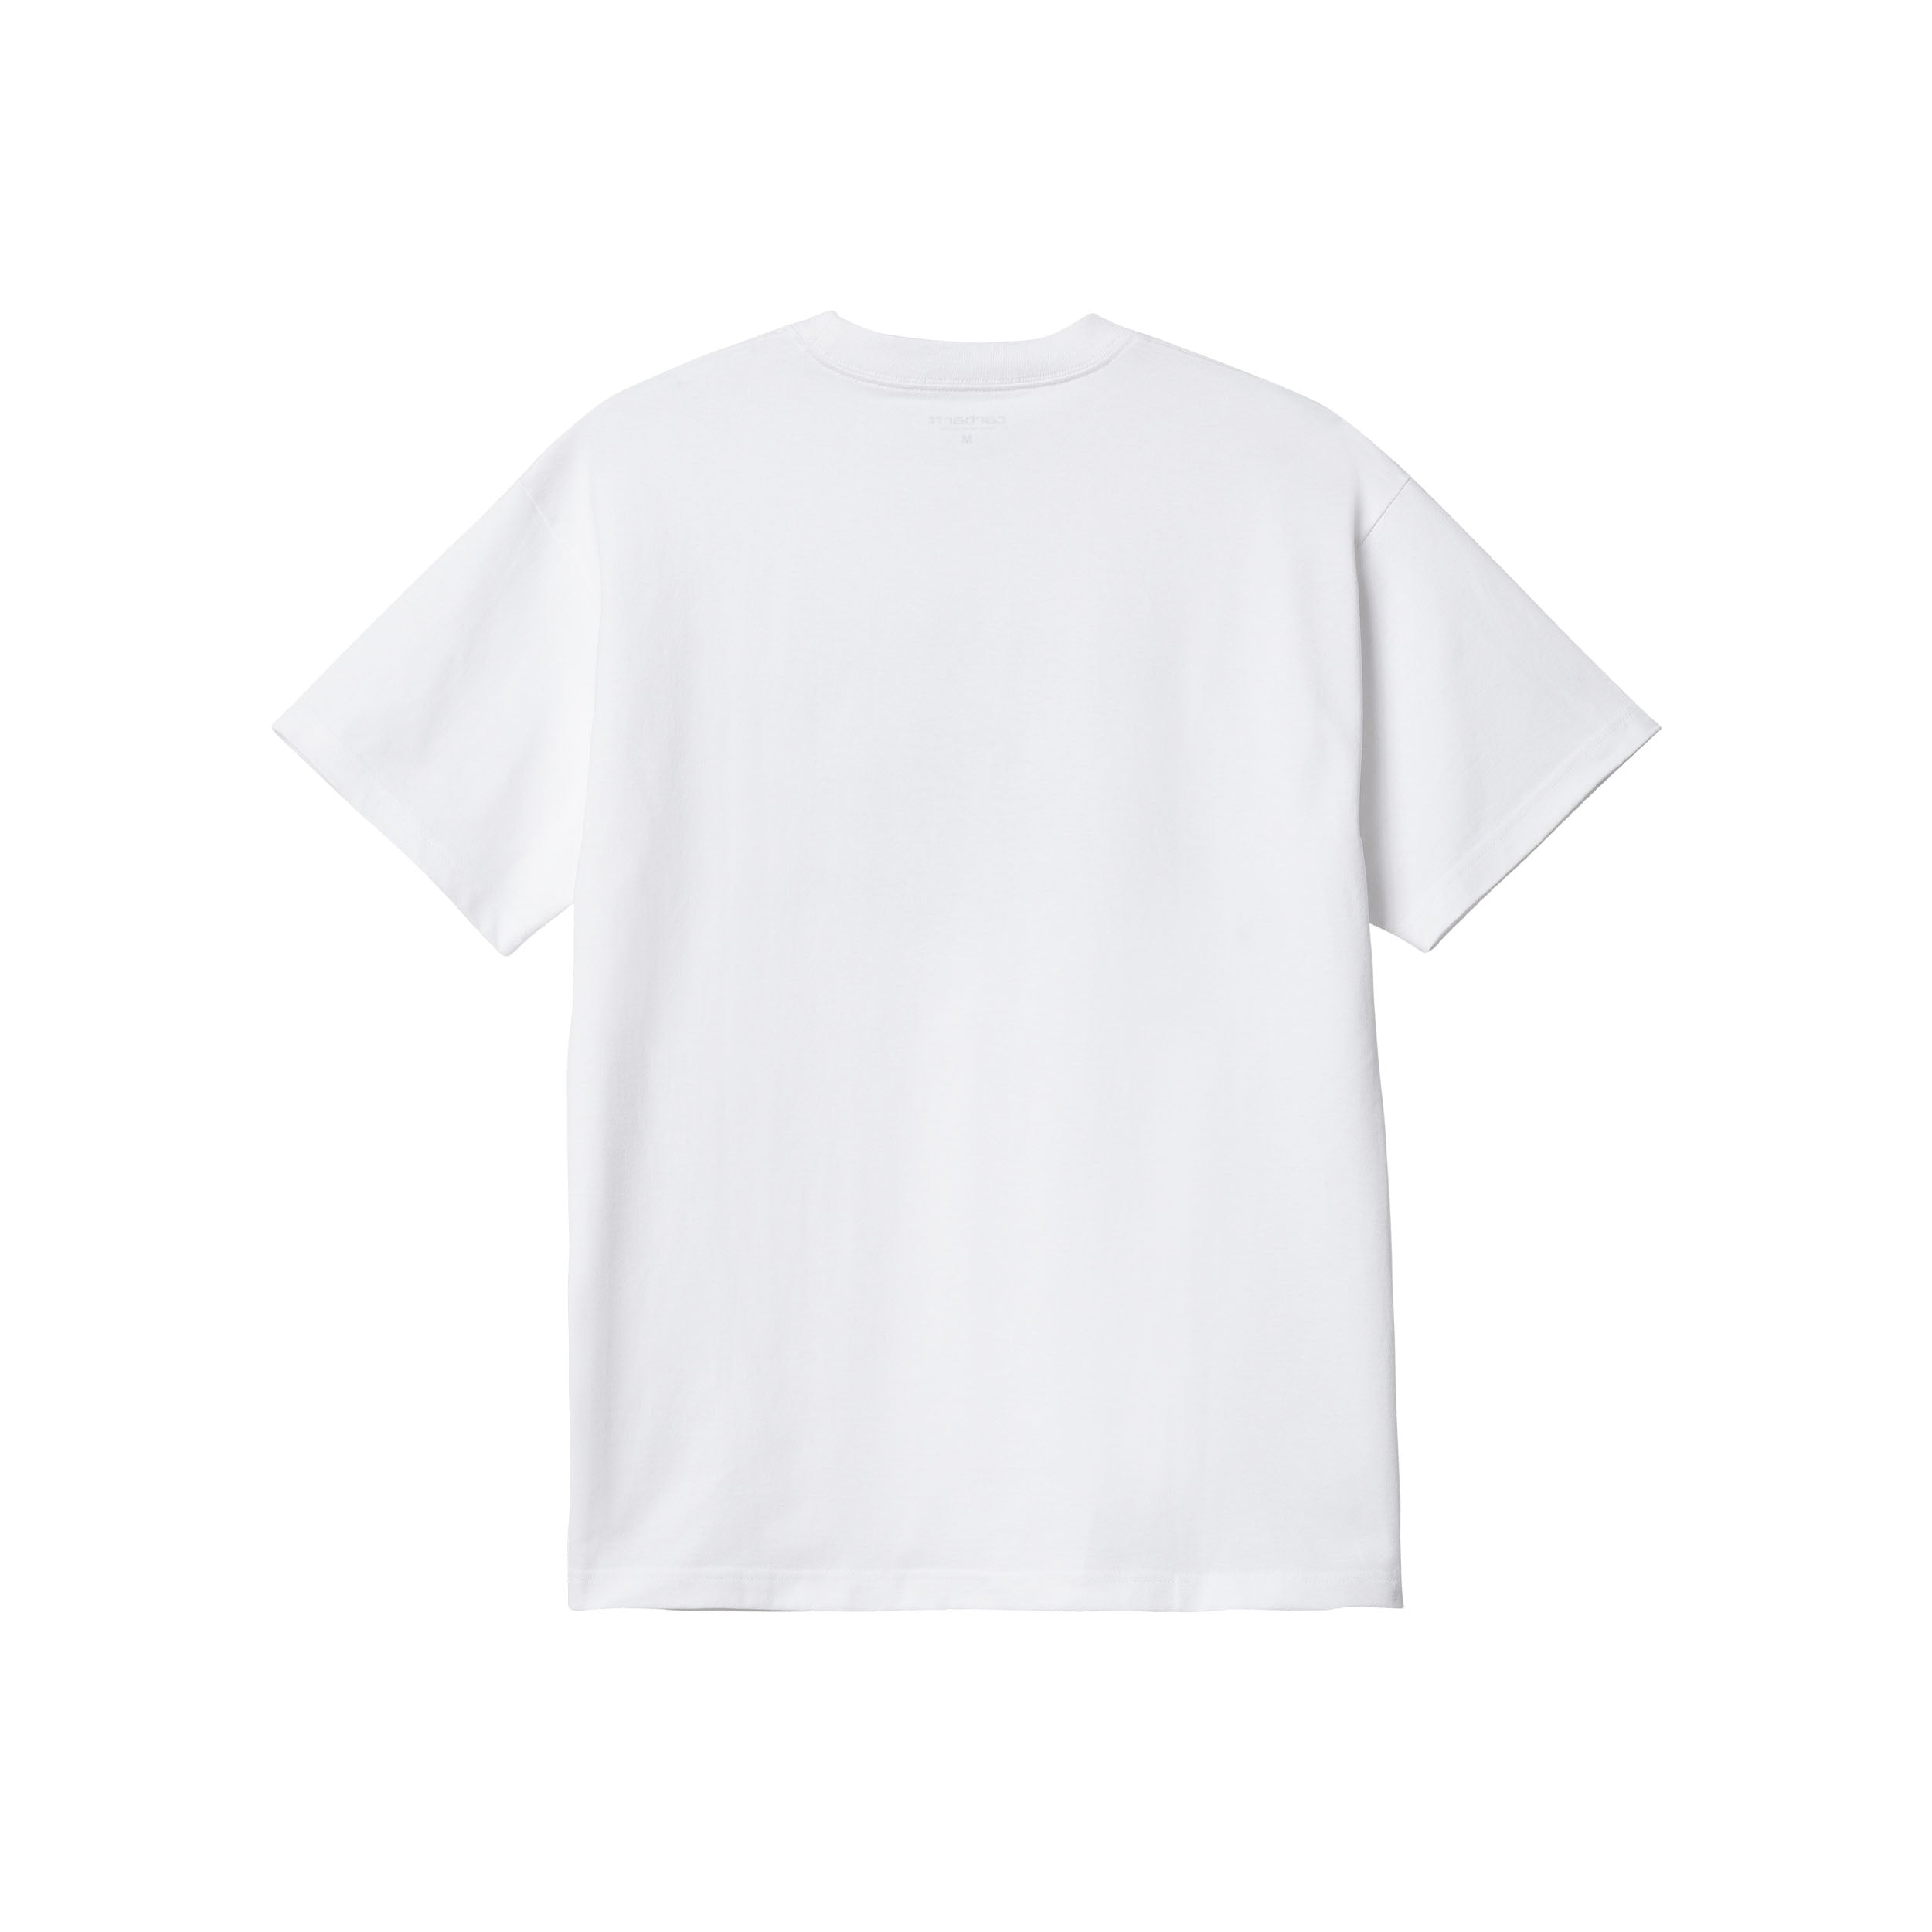 Carhartt WIP S/S Underground Sound T-Shirt (white) - Blue Mountain Store